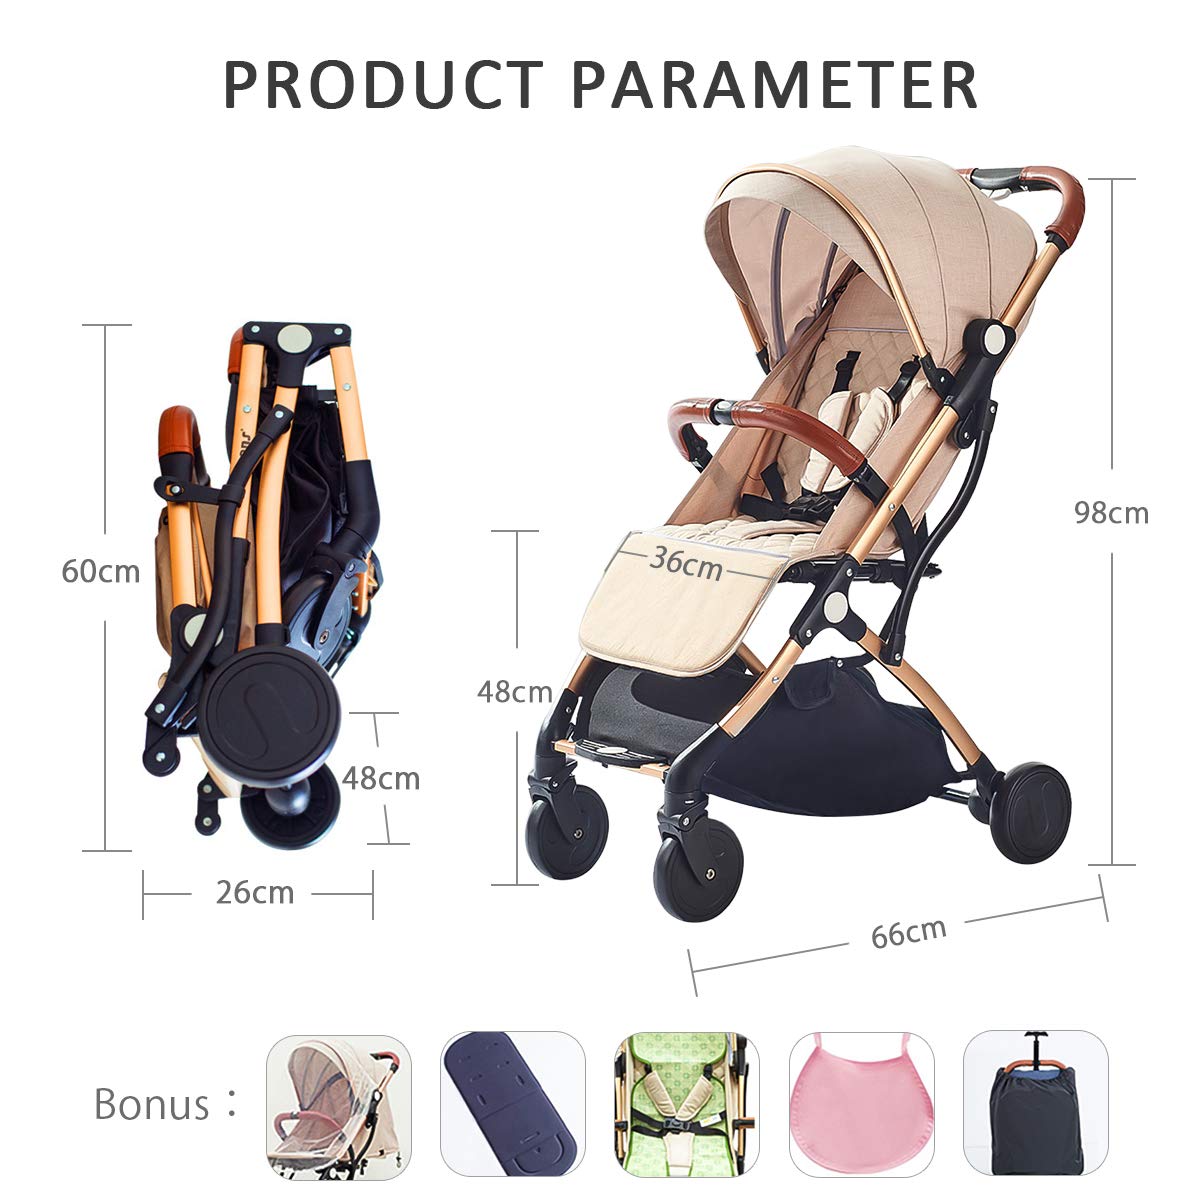 sonarin lightweight stroller